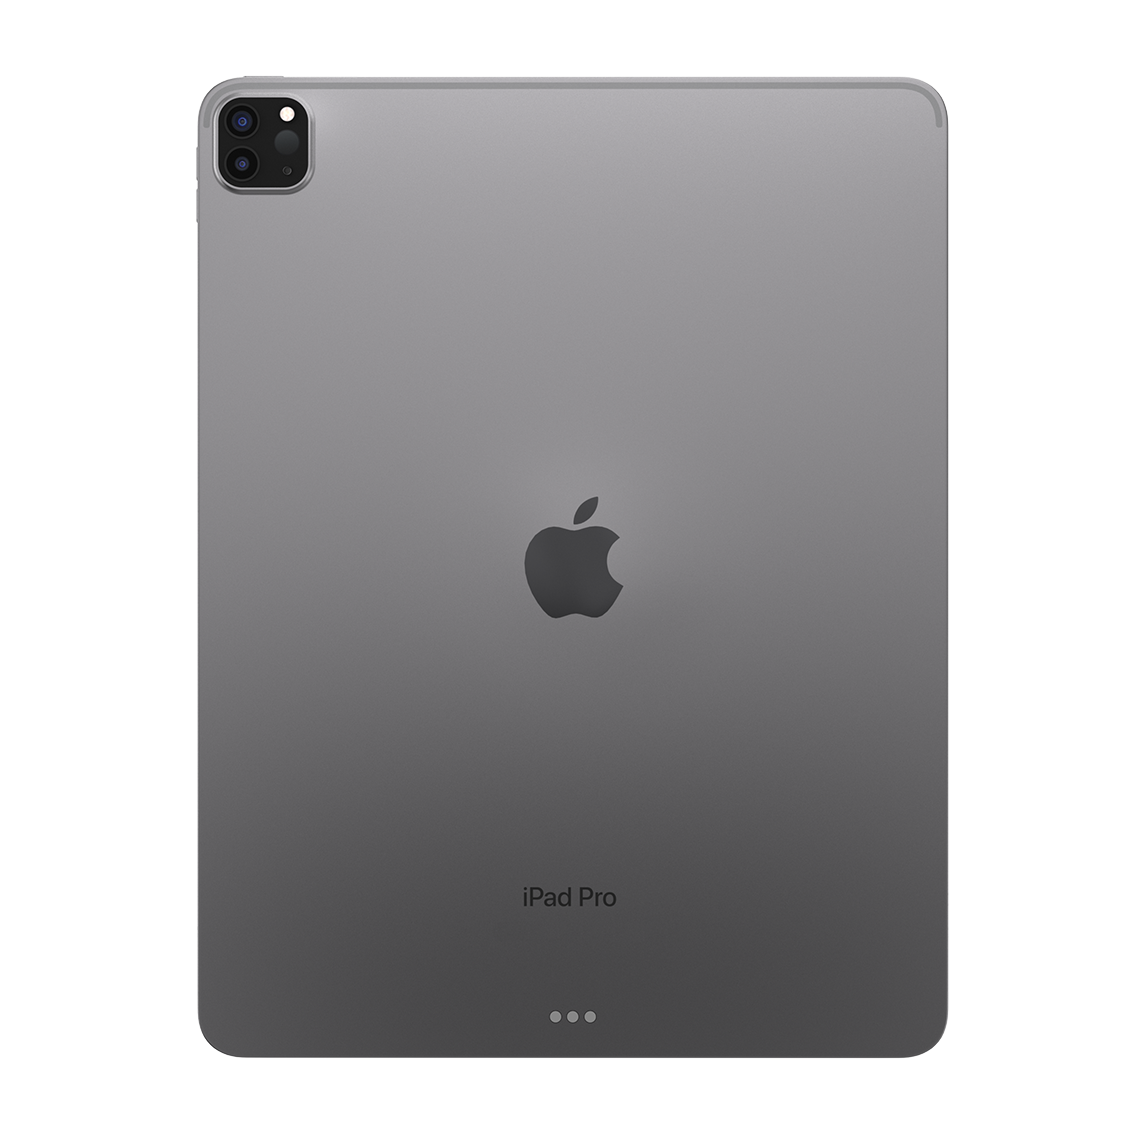 Apple iPad Pro 11-inch 4th Generation - Space Gray - 256GB, Wi-Fi, Grade A